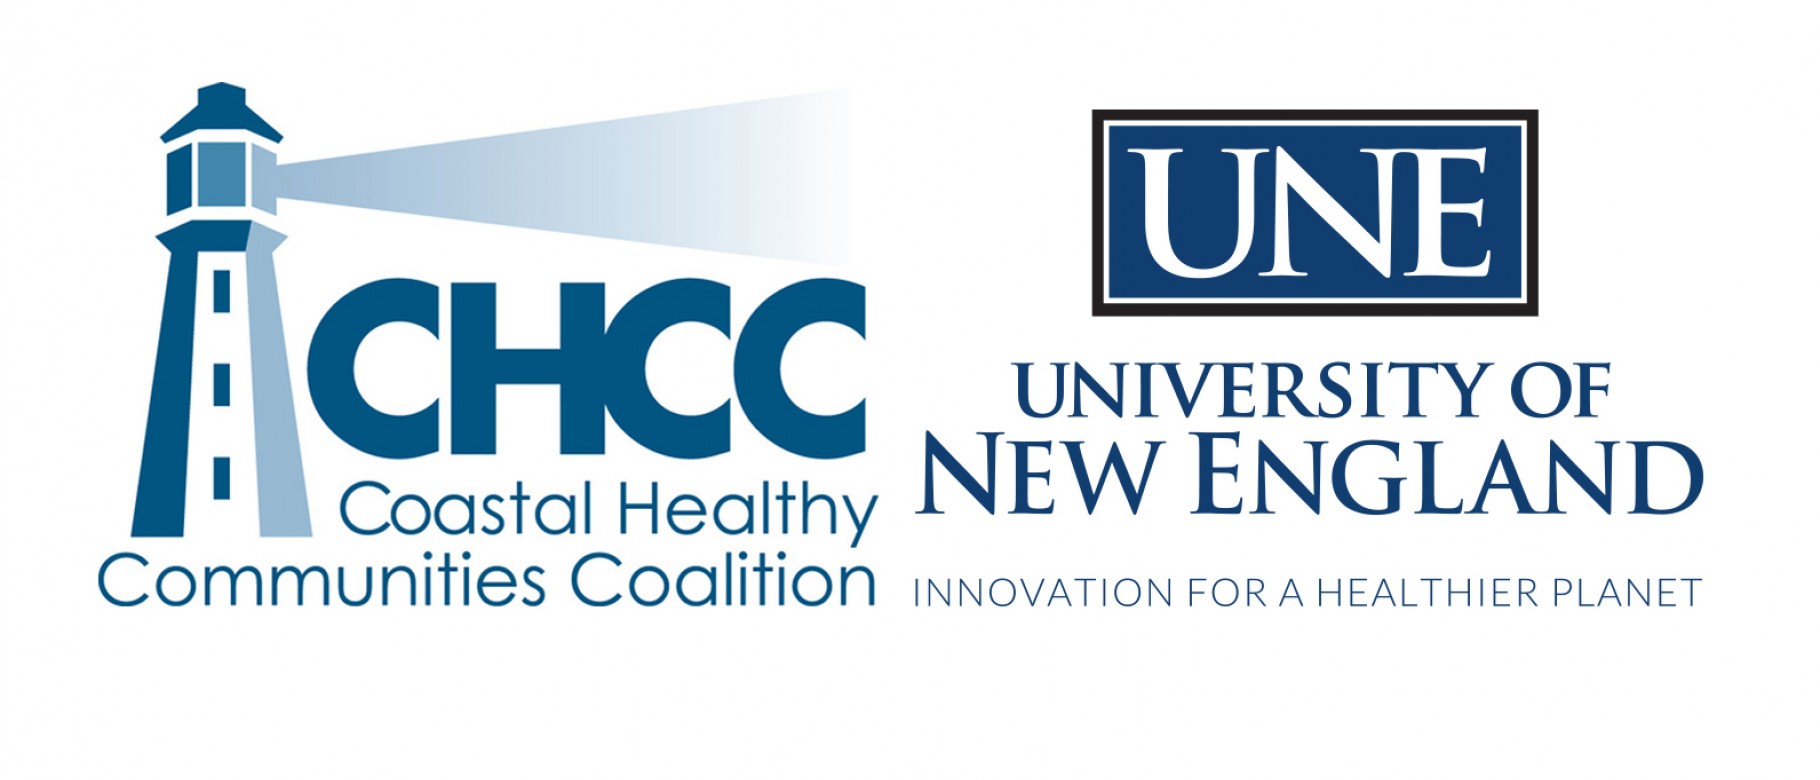 UNE's Coastal Healthy Communities Coalition